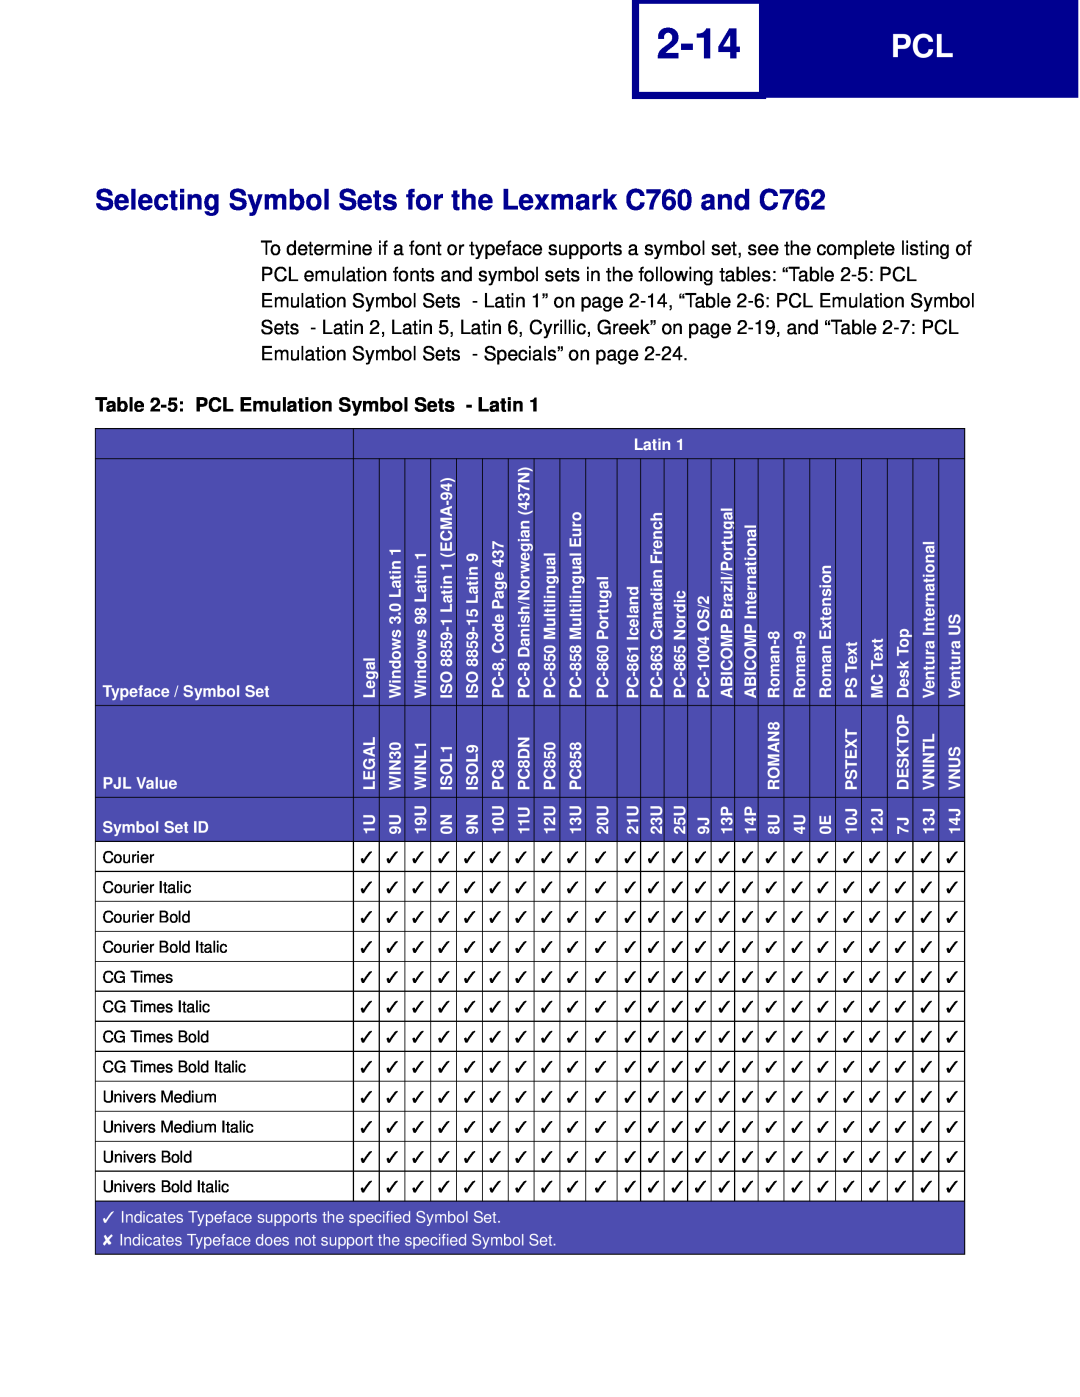 Lexmark manual 2-14, Selecting Symbol Sets for the Lexmark C760 and C762, 5 PCL Emulation Symbol Sets - Latin 